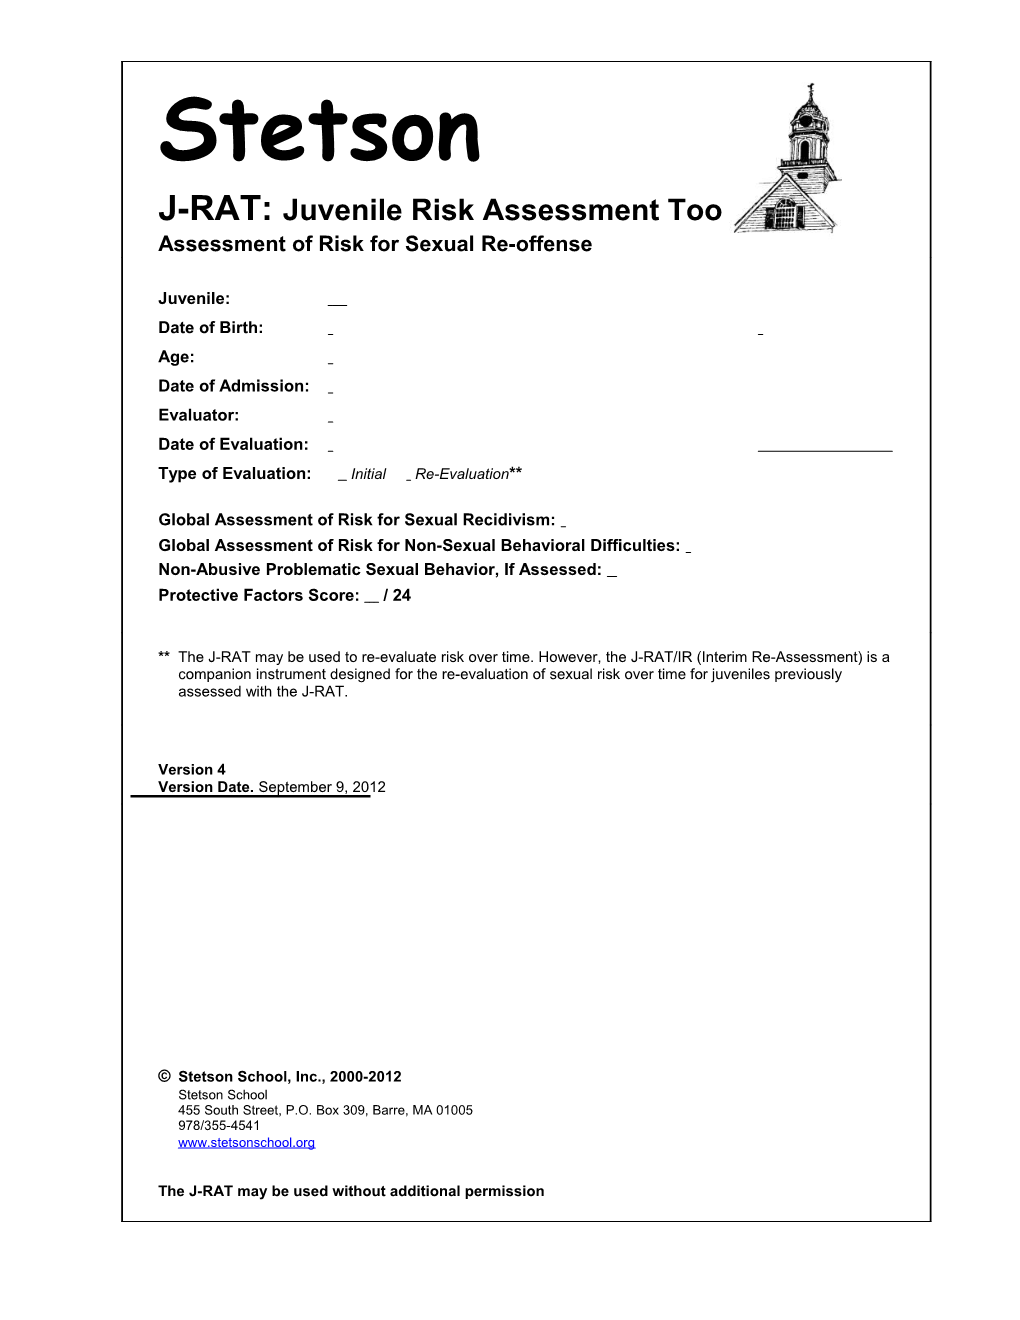 Juvenile Risk Assessment Tool (J-RAT)